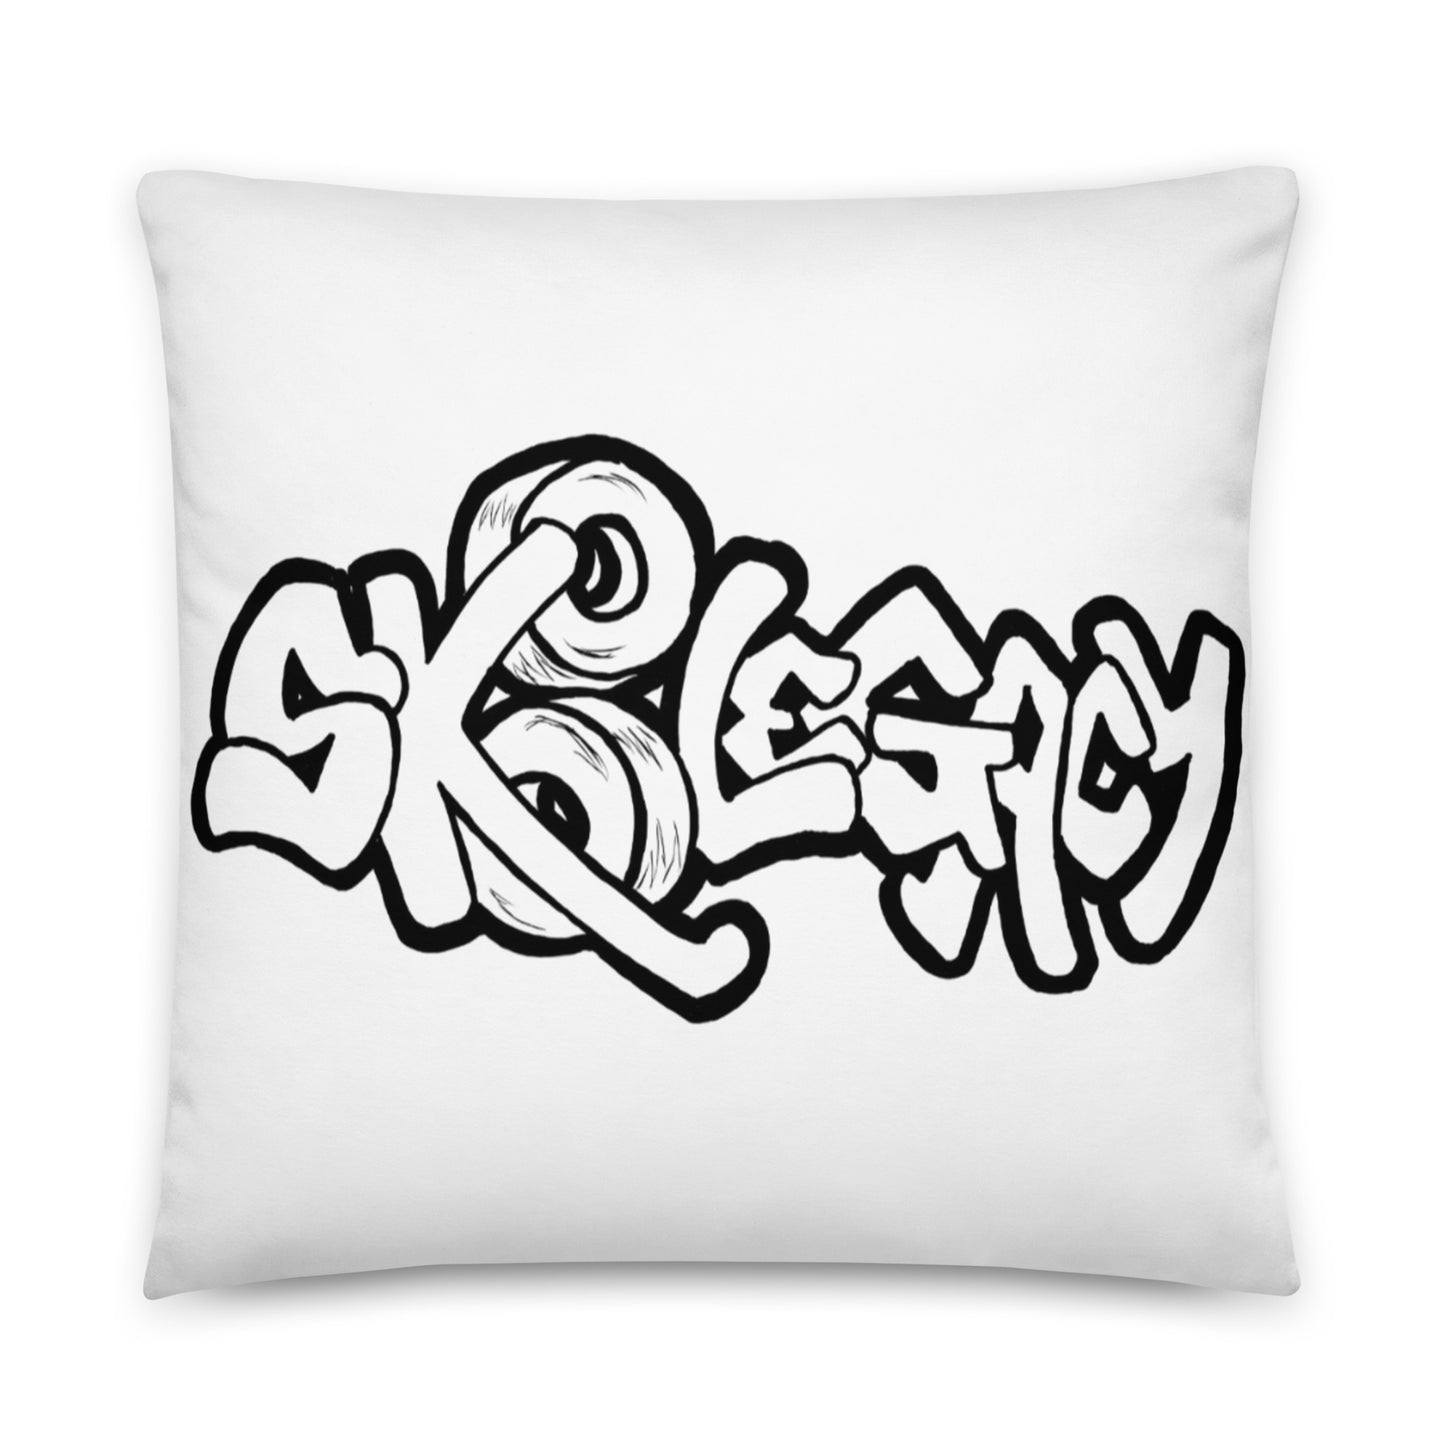 Sk8 Legacy Pillow